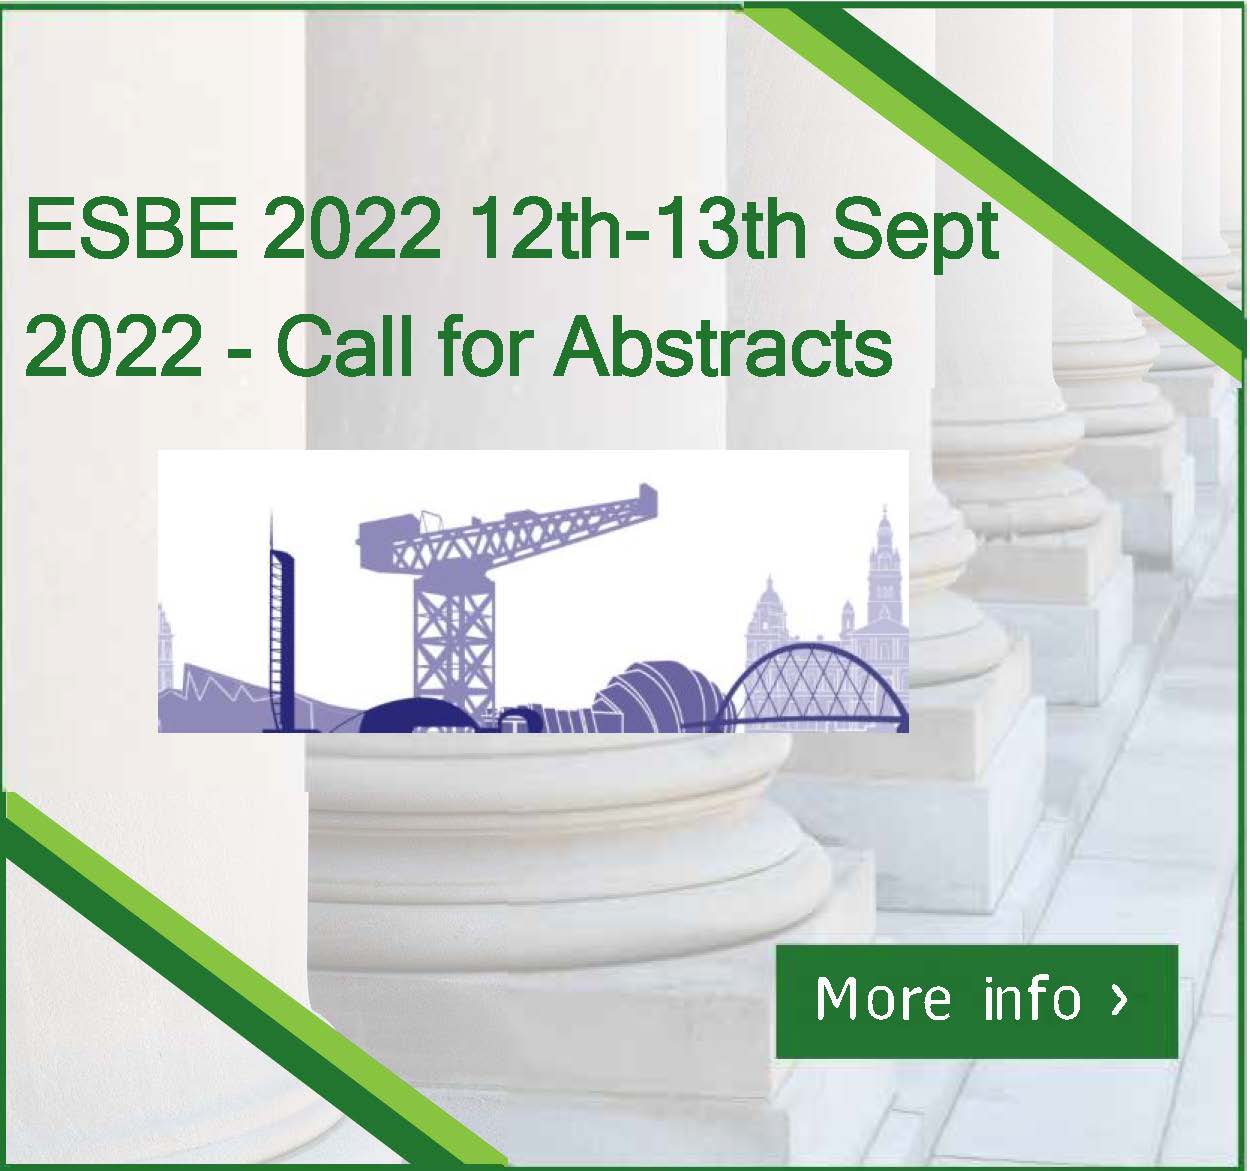 ESBE 2022 European Regional Virtual Conference 12th-13th Sept 2022